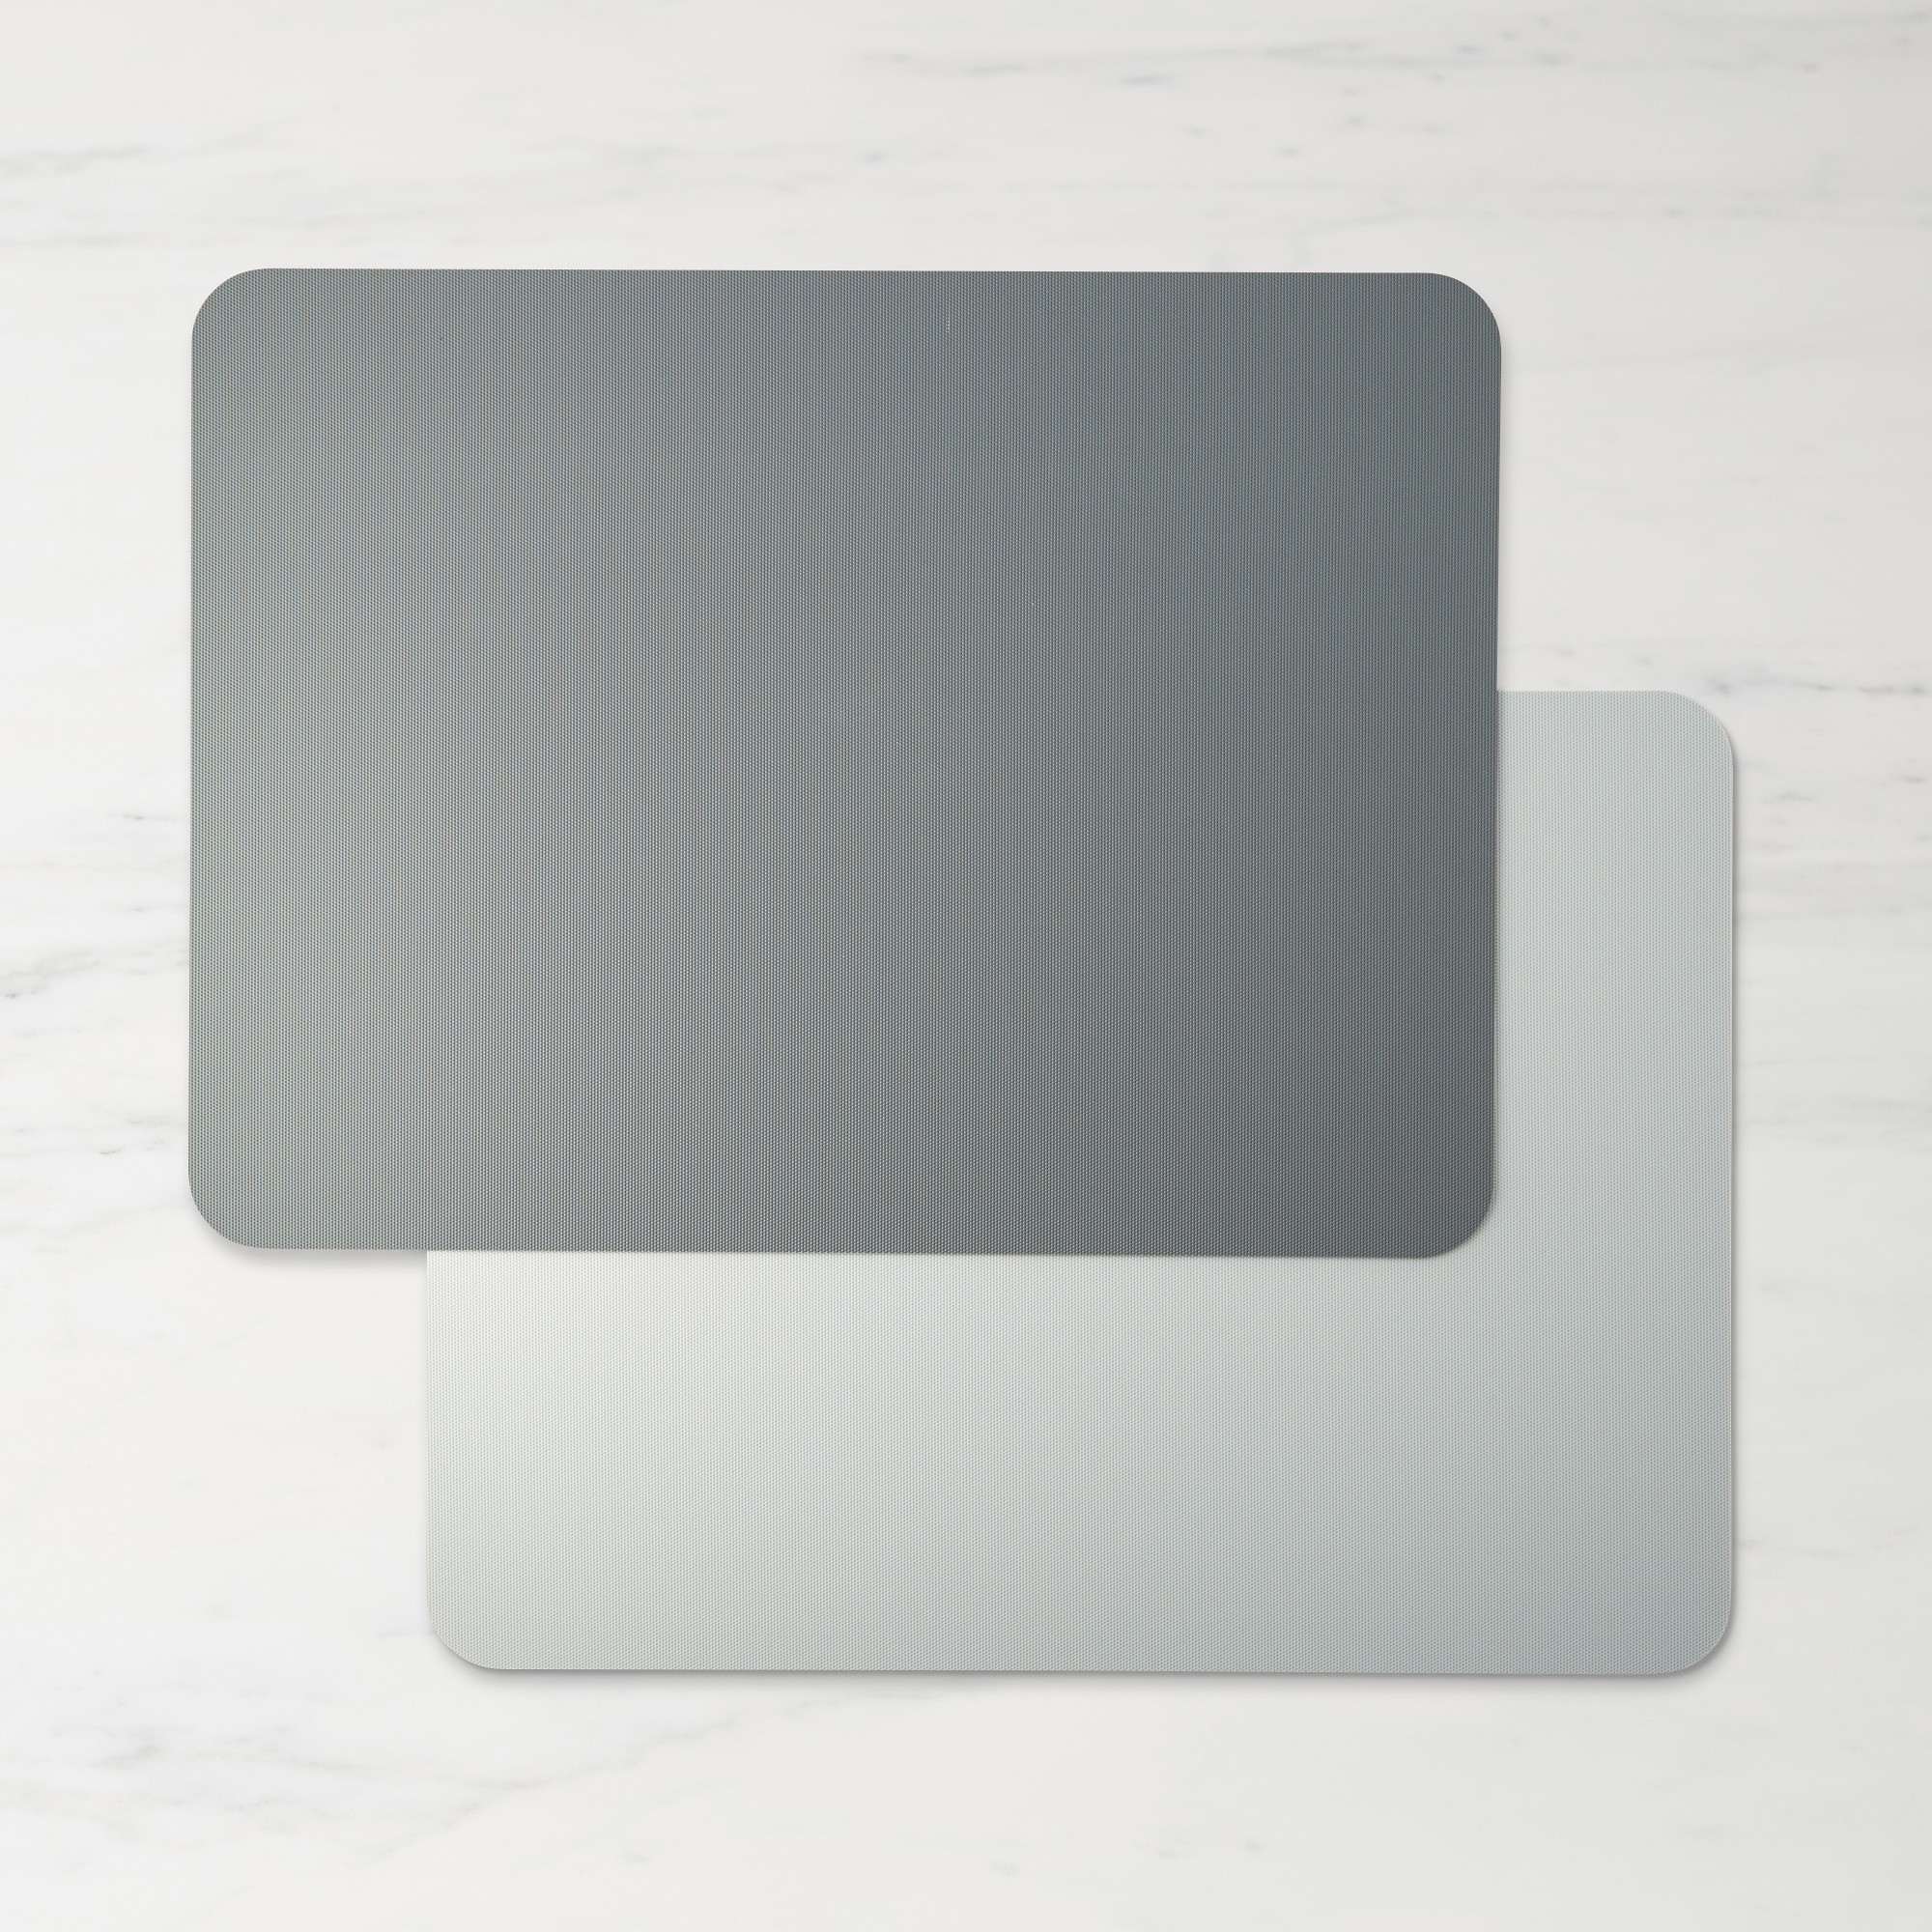 Flex Mats Cutting Boards, Set of 2, Grey